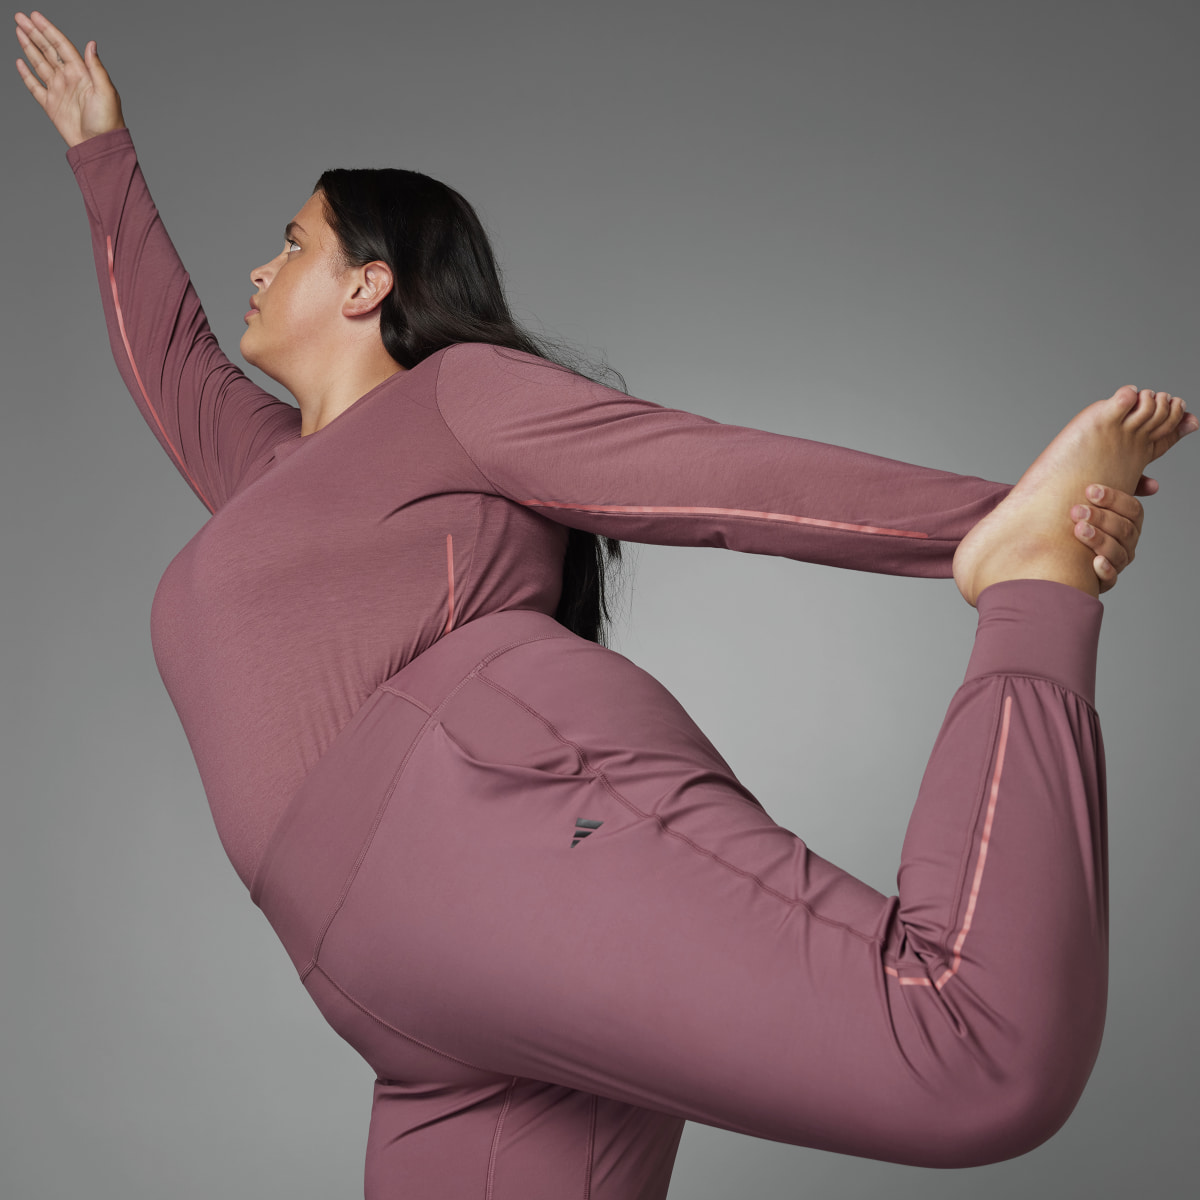 Adidas Authentic Balance Yoga Pants. 8